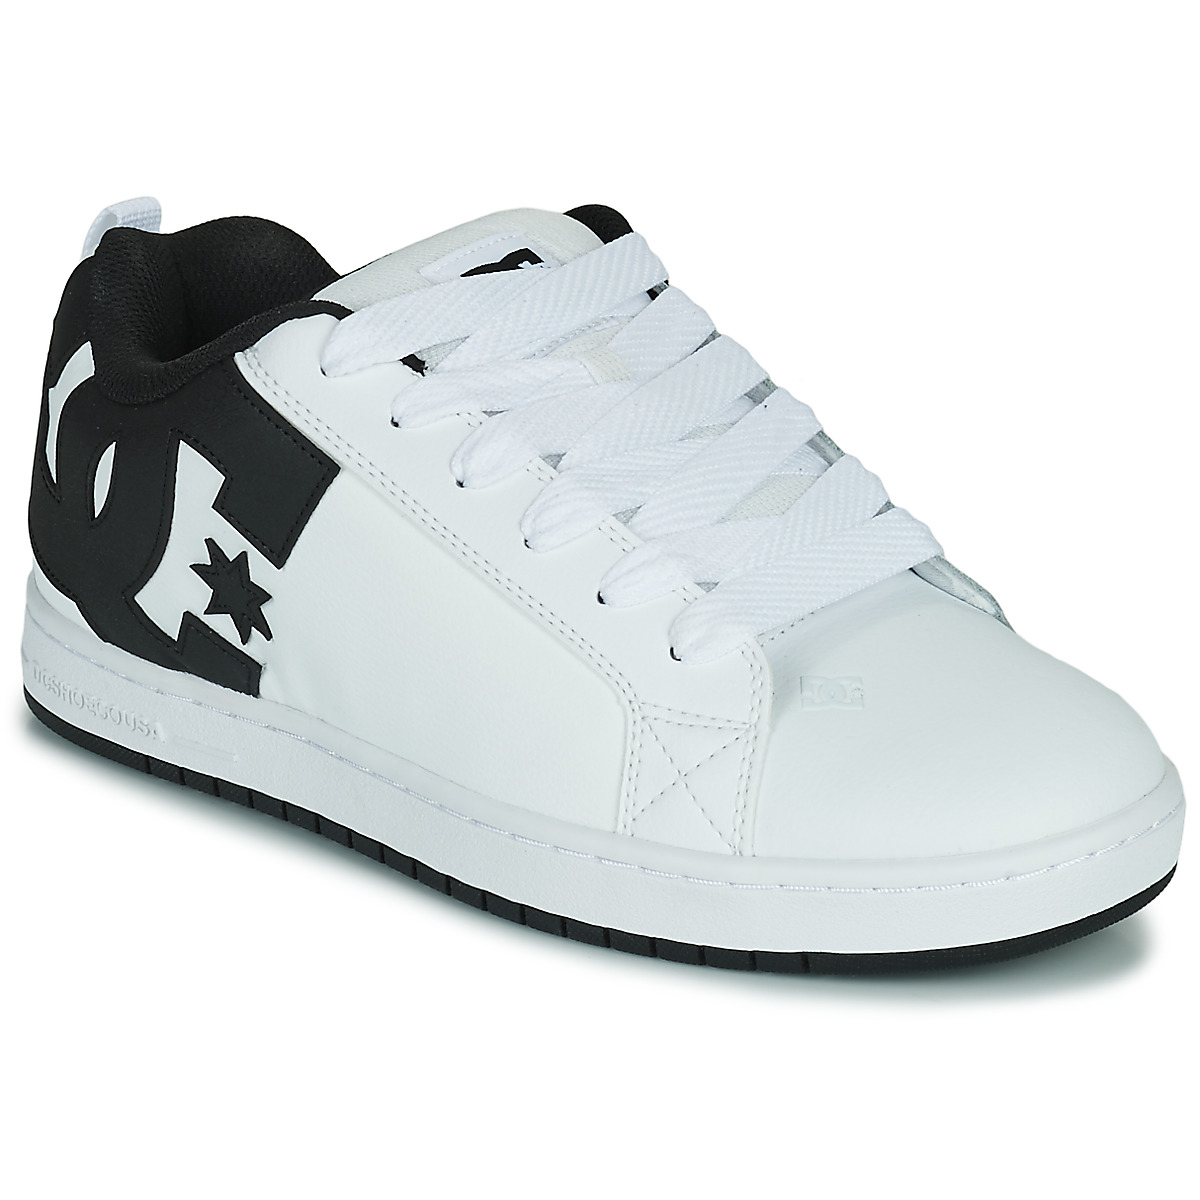 Shoes COURT GRAFFIK Blanco Negro - Envío gratis | Spartoo.es ! - Zapatos Zapatos de Hombre 60,00 €